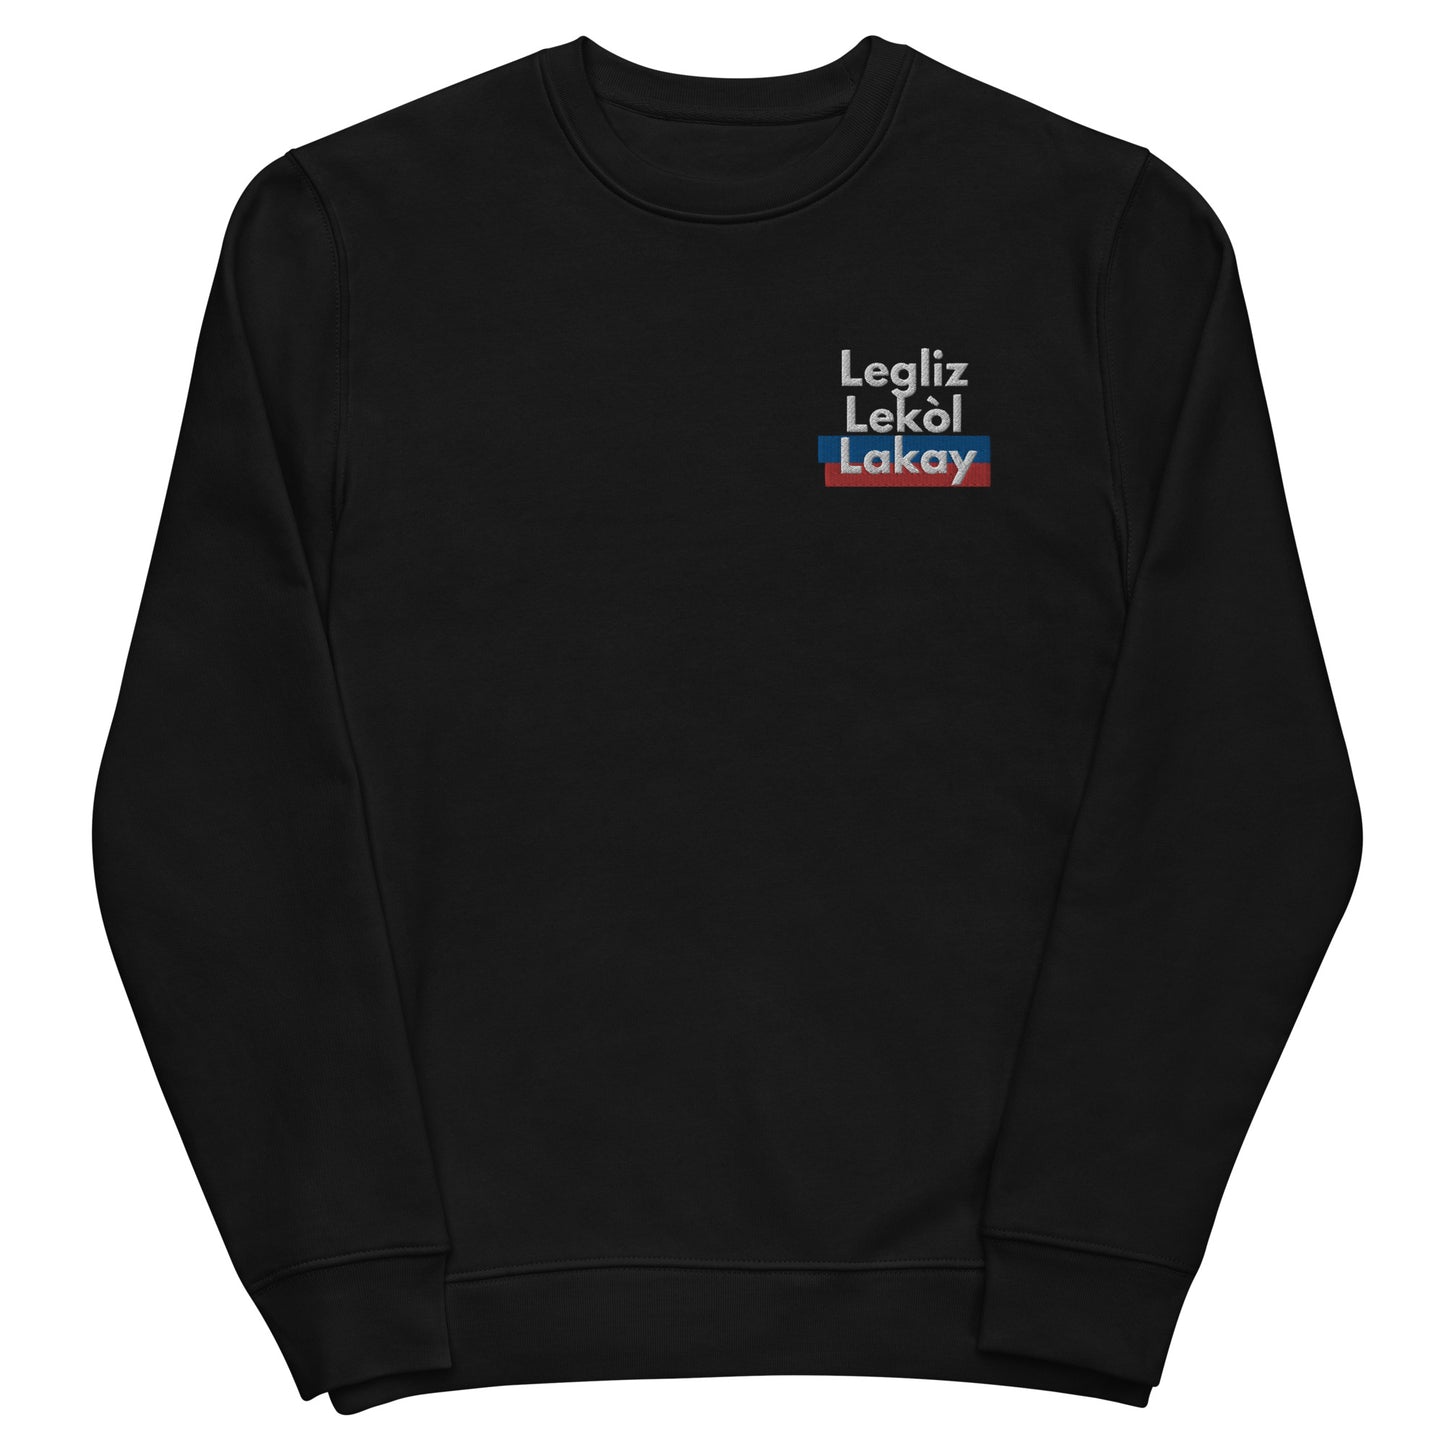 Legliz lekol Lakay Embroidery  sweatshirt